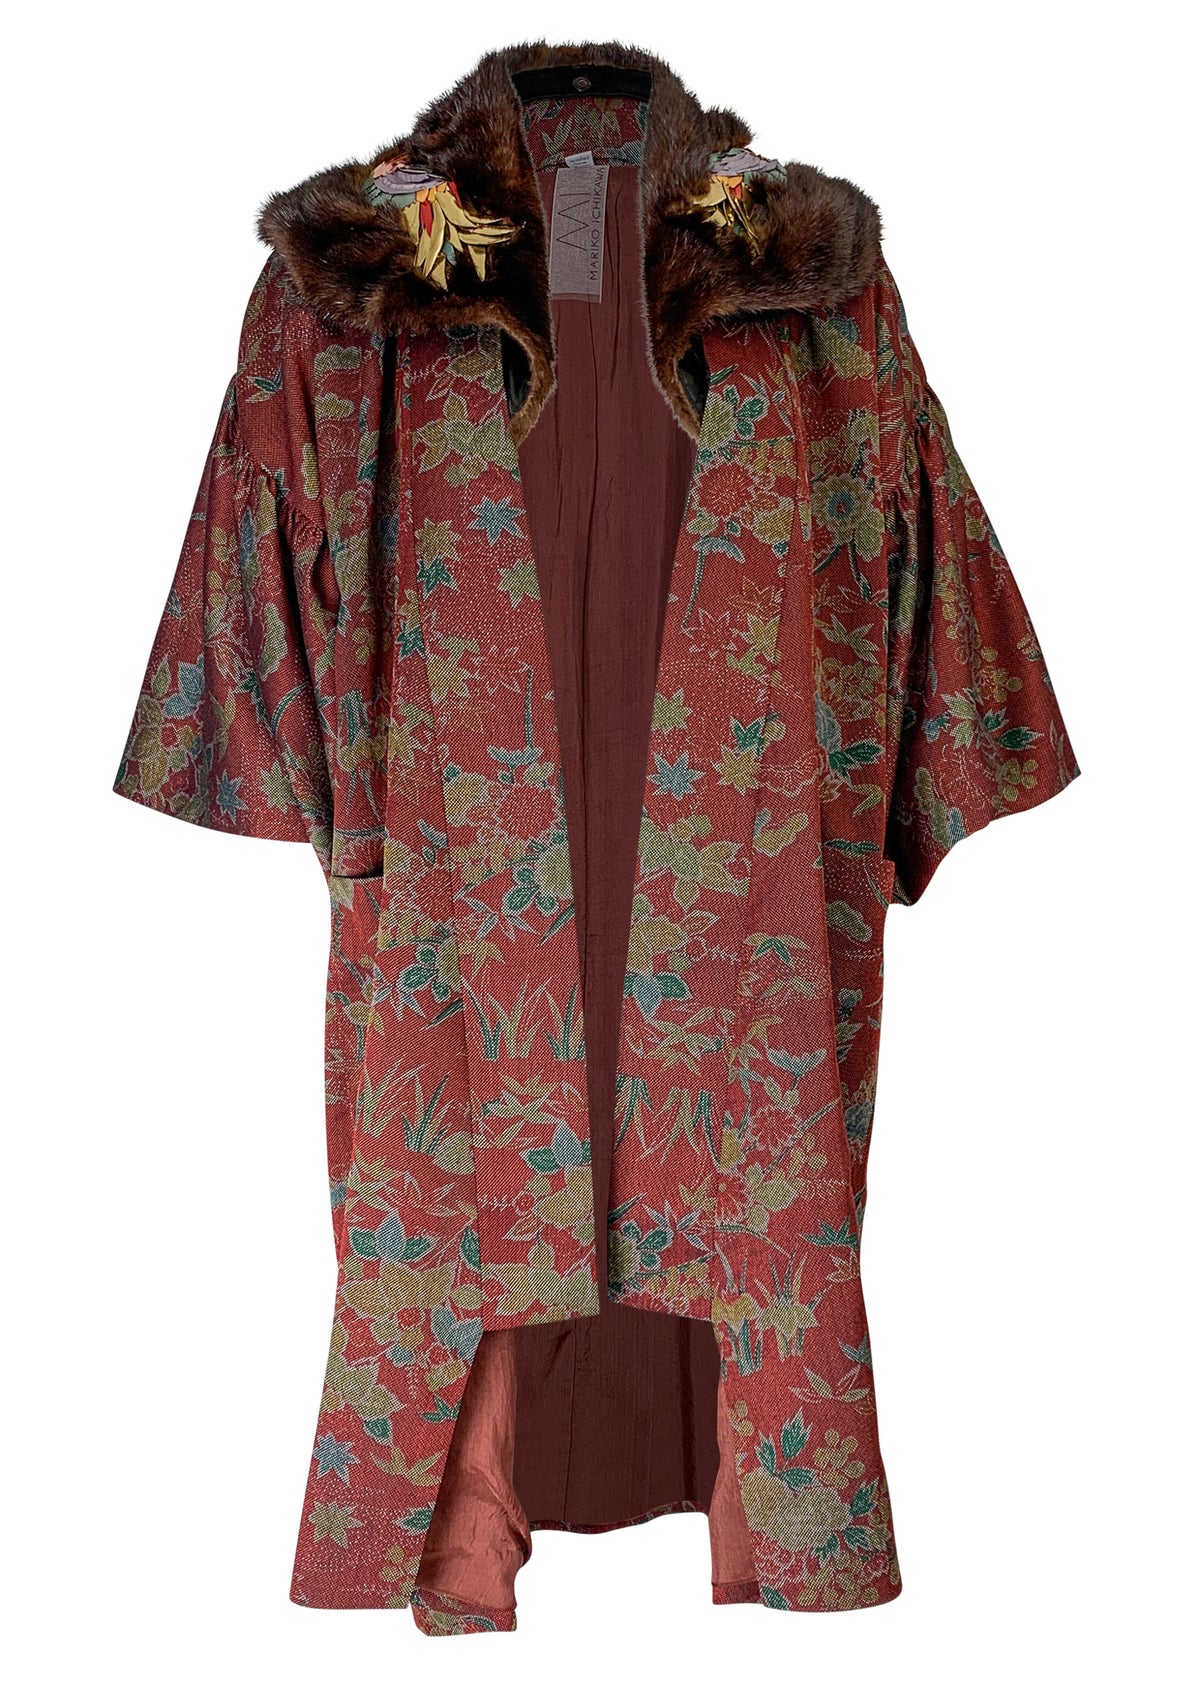 Poiret's Kimono – Mariko Ichikawa